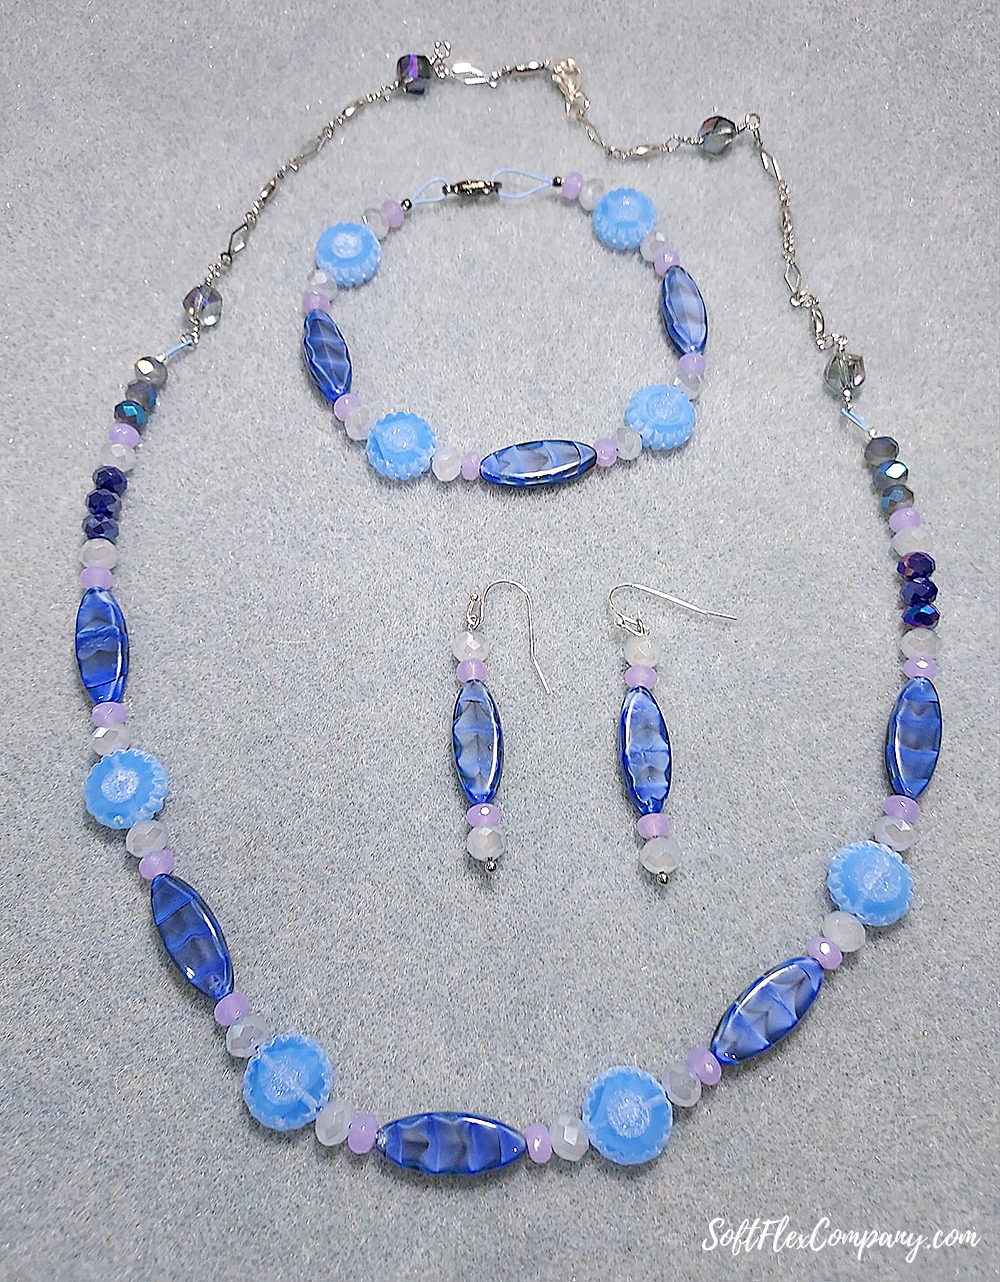 Rainy Day Blues Jewelry Design by Carey Marshall Leimbach